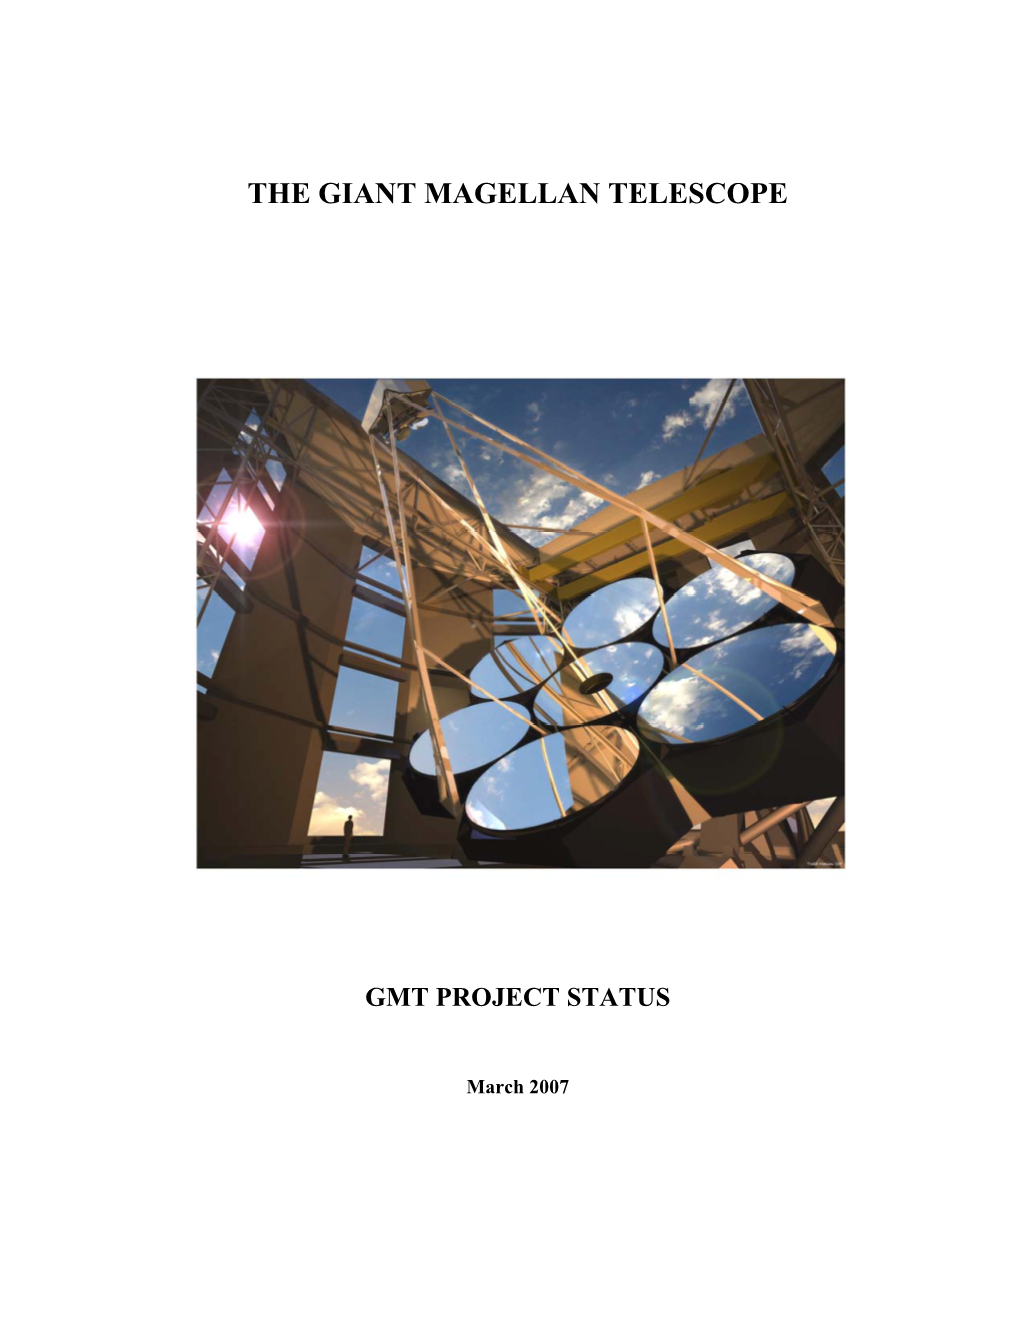 The Giant Magellan Telescope Gmt Project Status